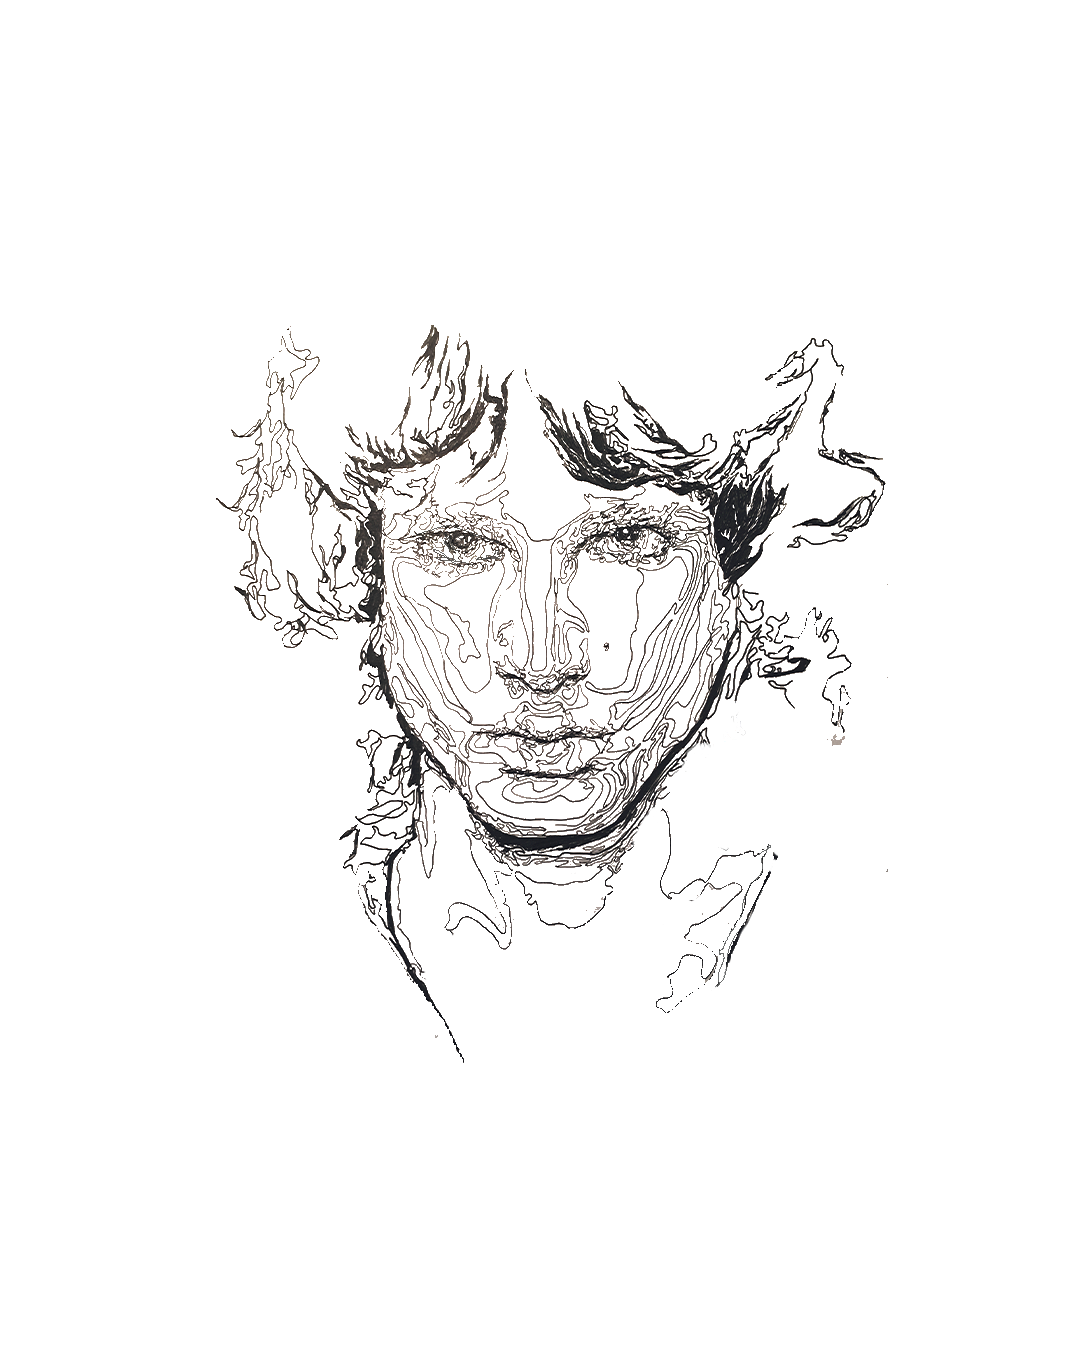 line drawing artwork visiography of Jim Morrison